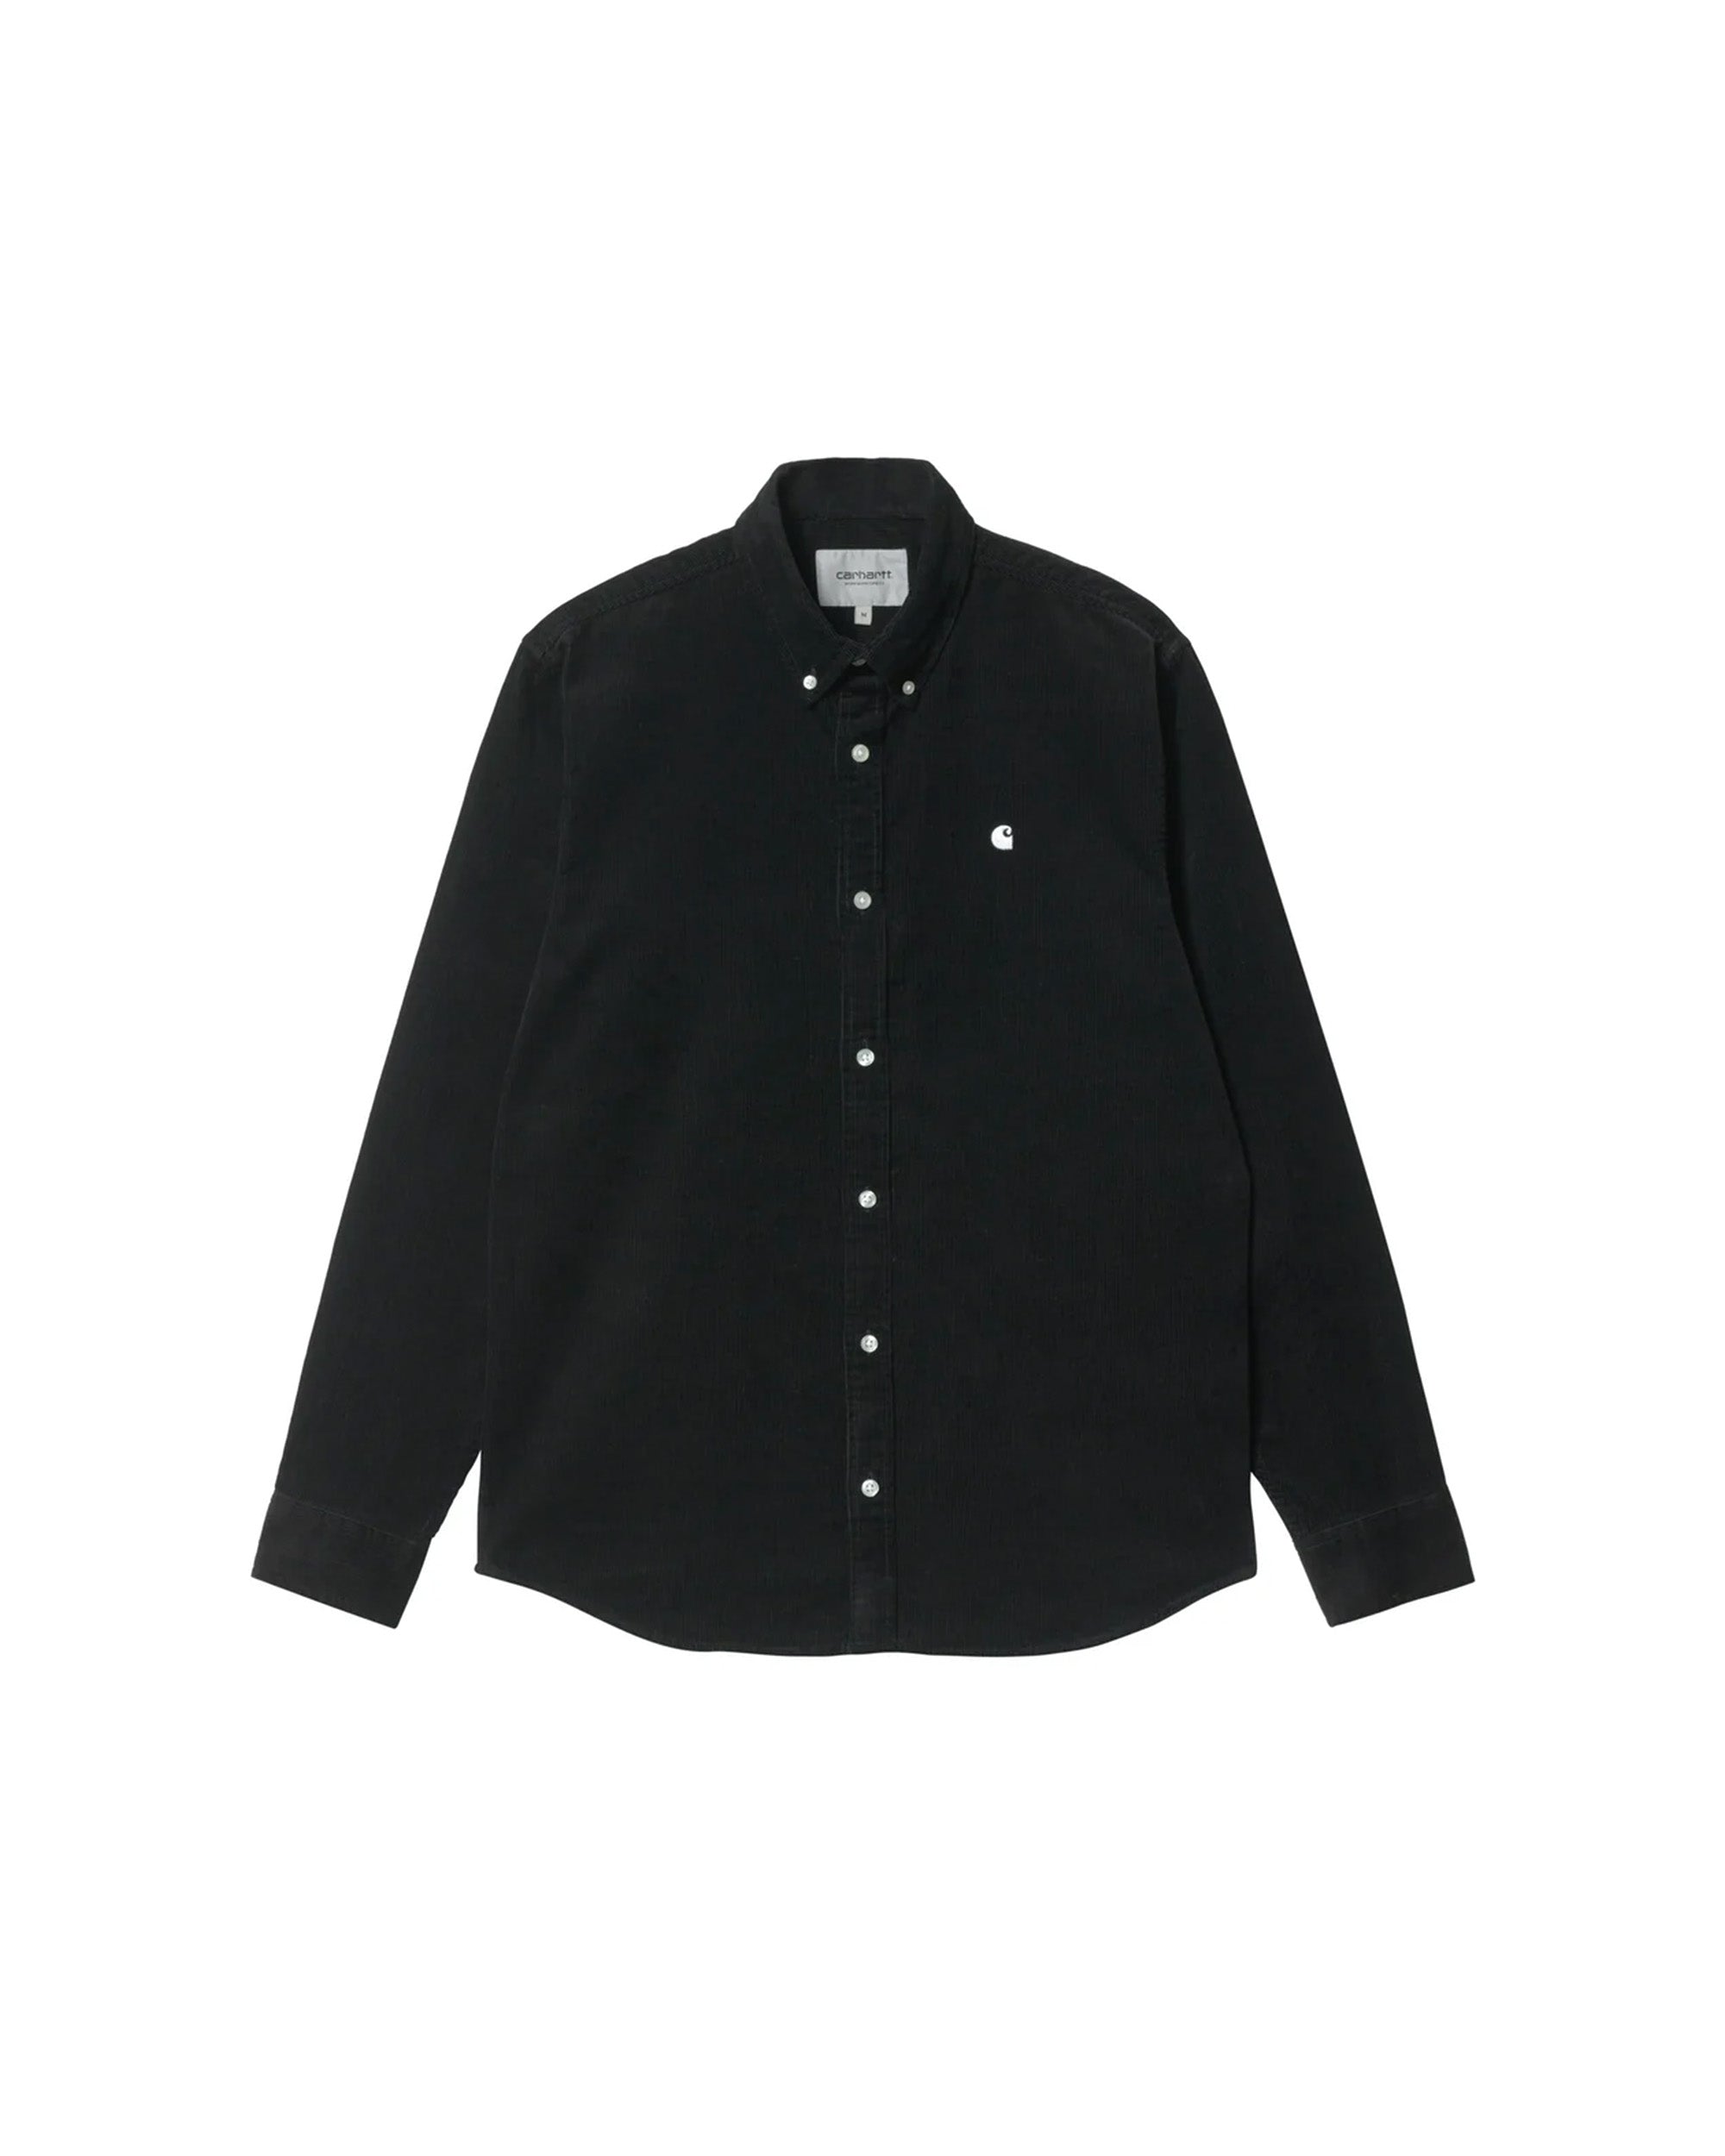 Madison Fine Cord Shirt - Black / White